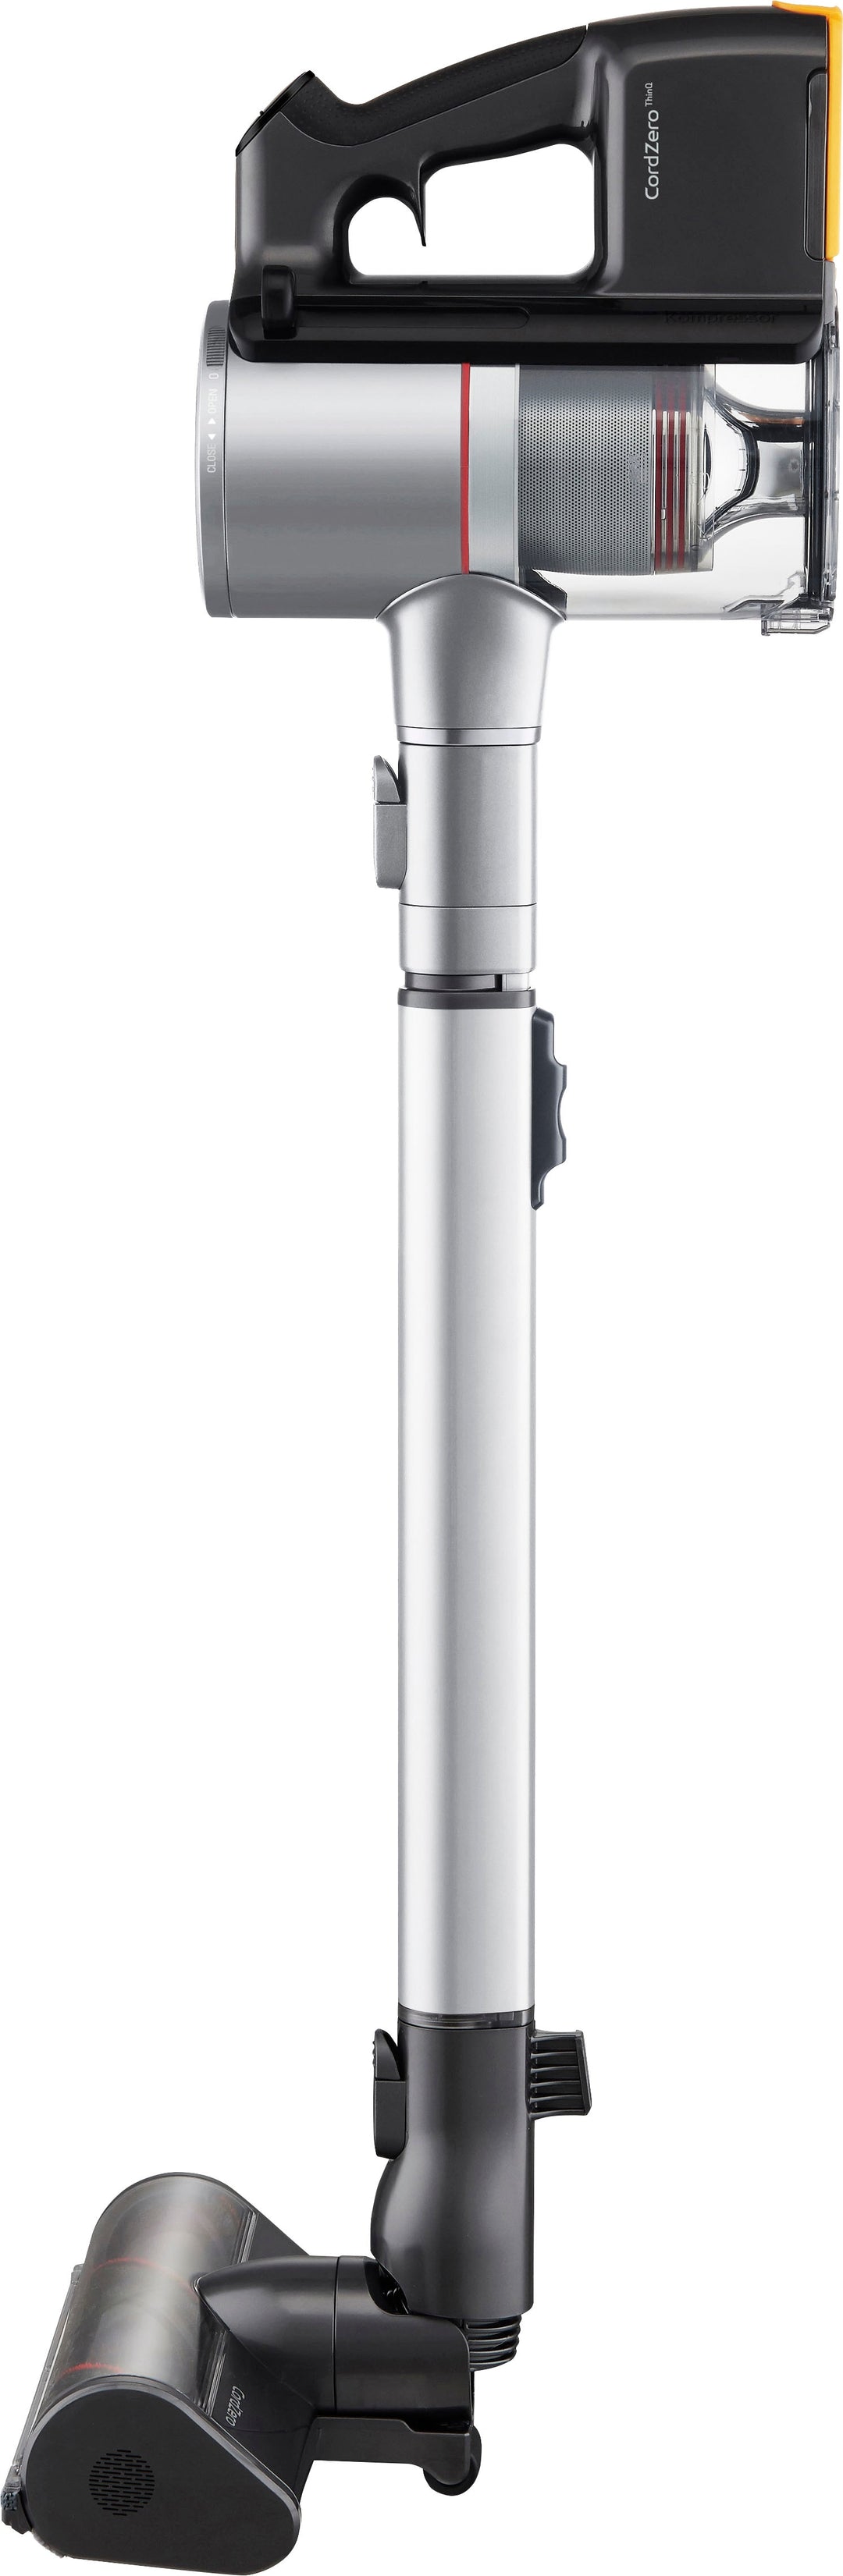 LG - CordZero Cordless Stick Vacuum with Kompressor technology - Matte Silver_11